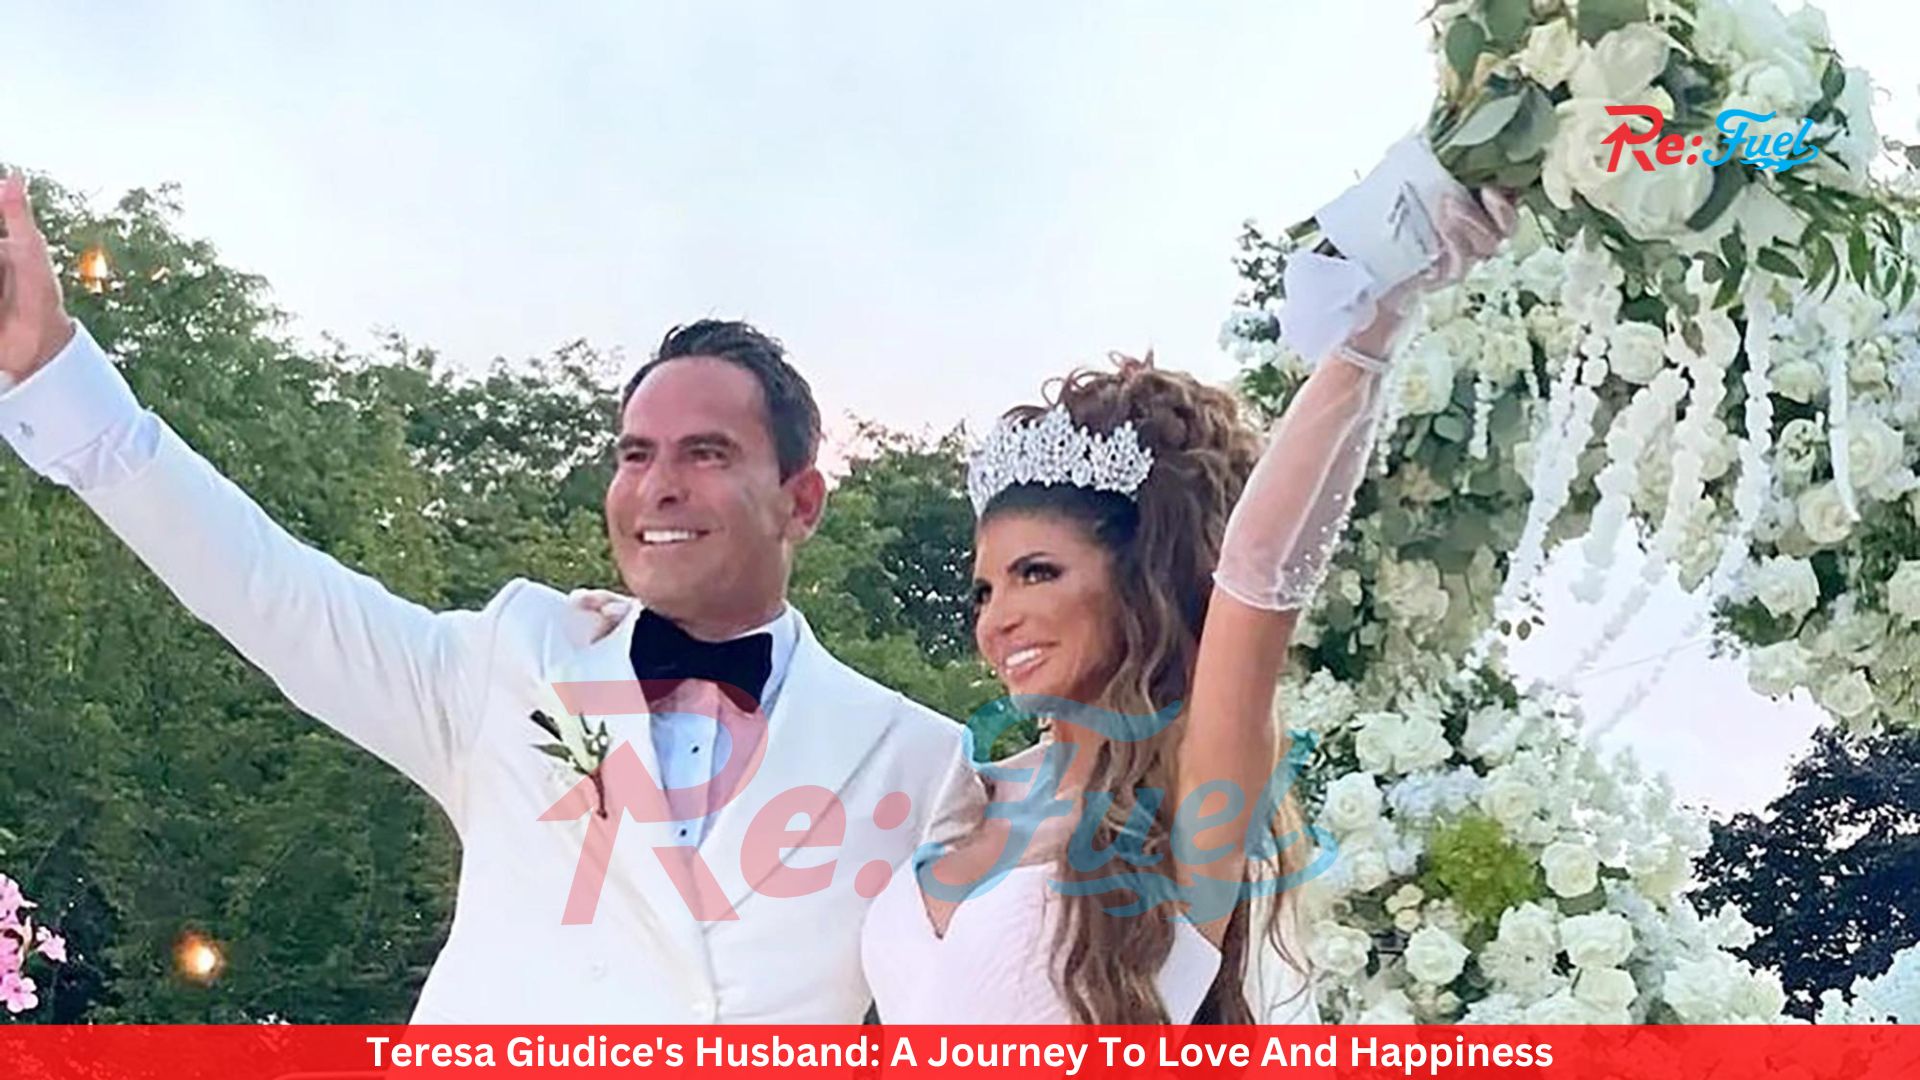 Teresa Giudice's Husband: A Journey To Love And Happiness